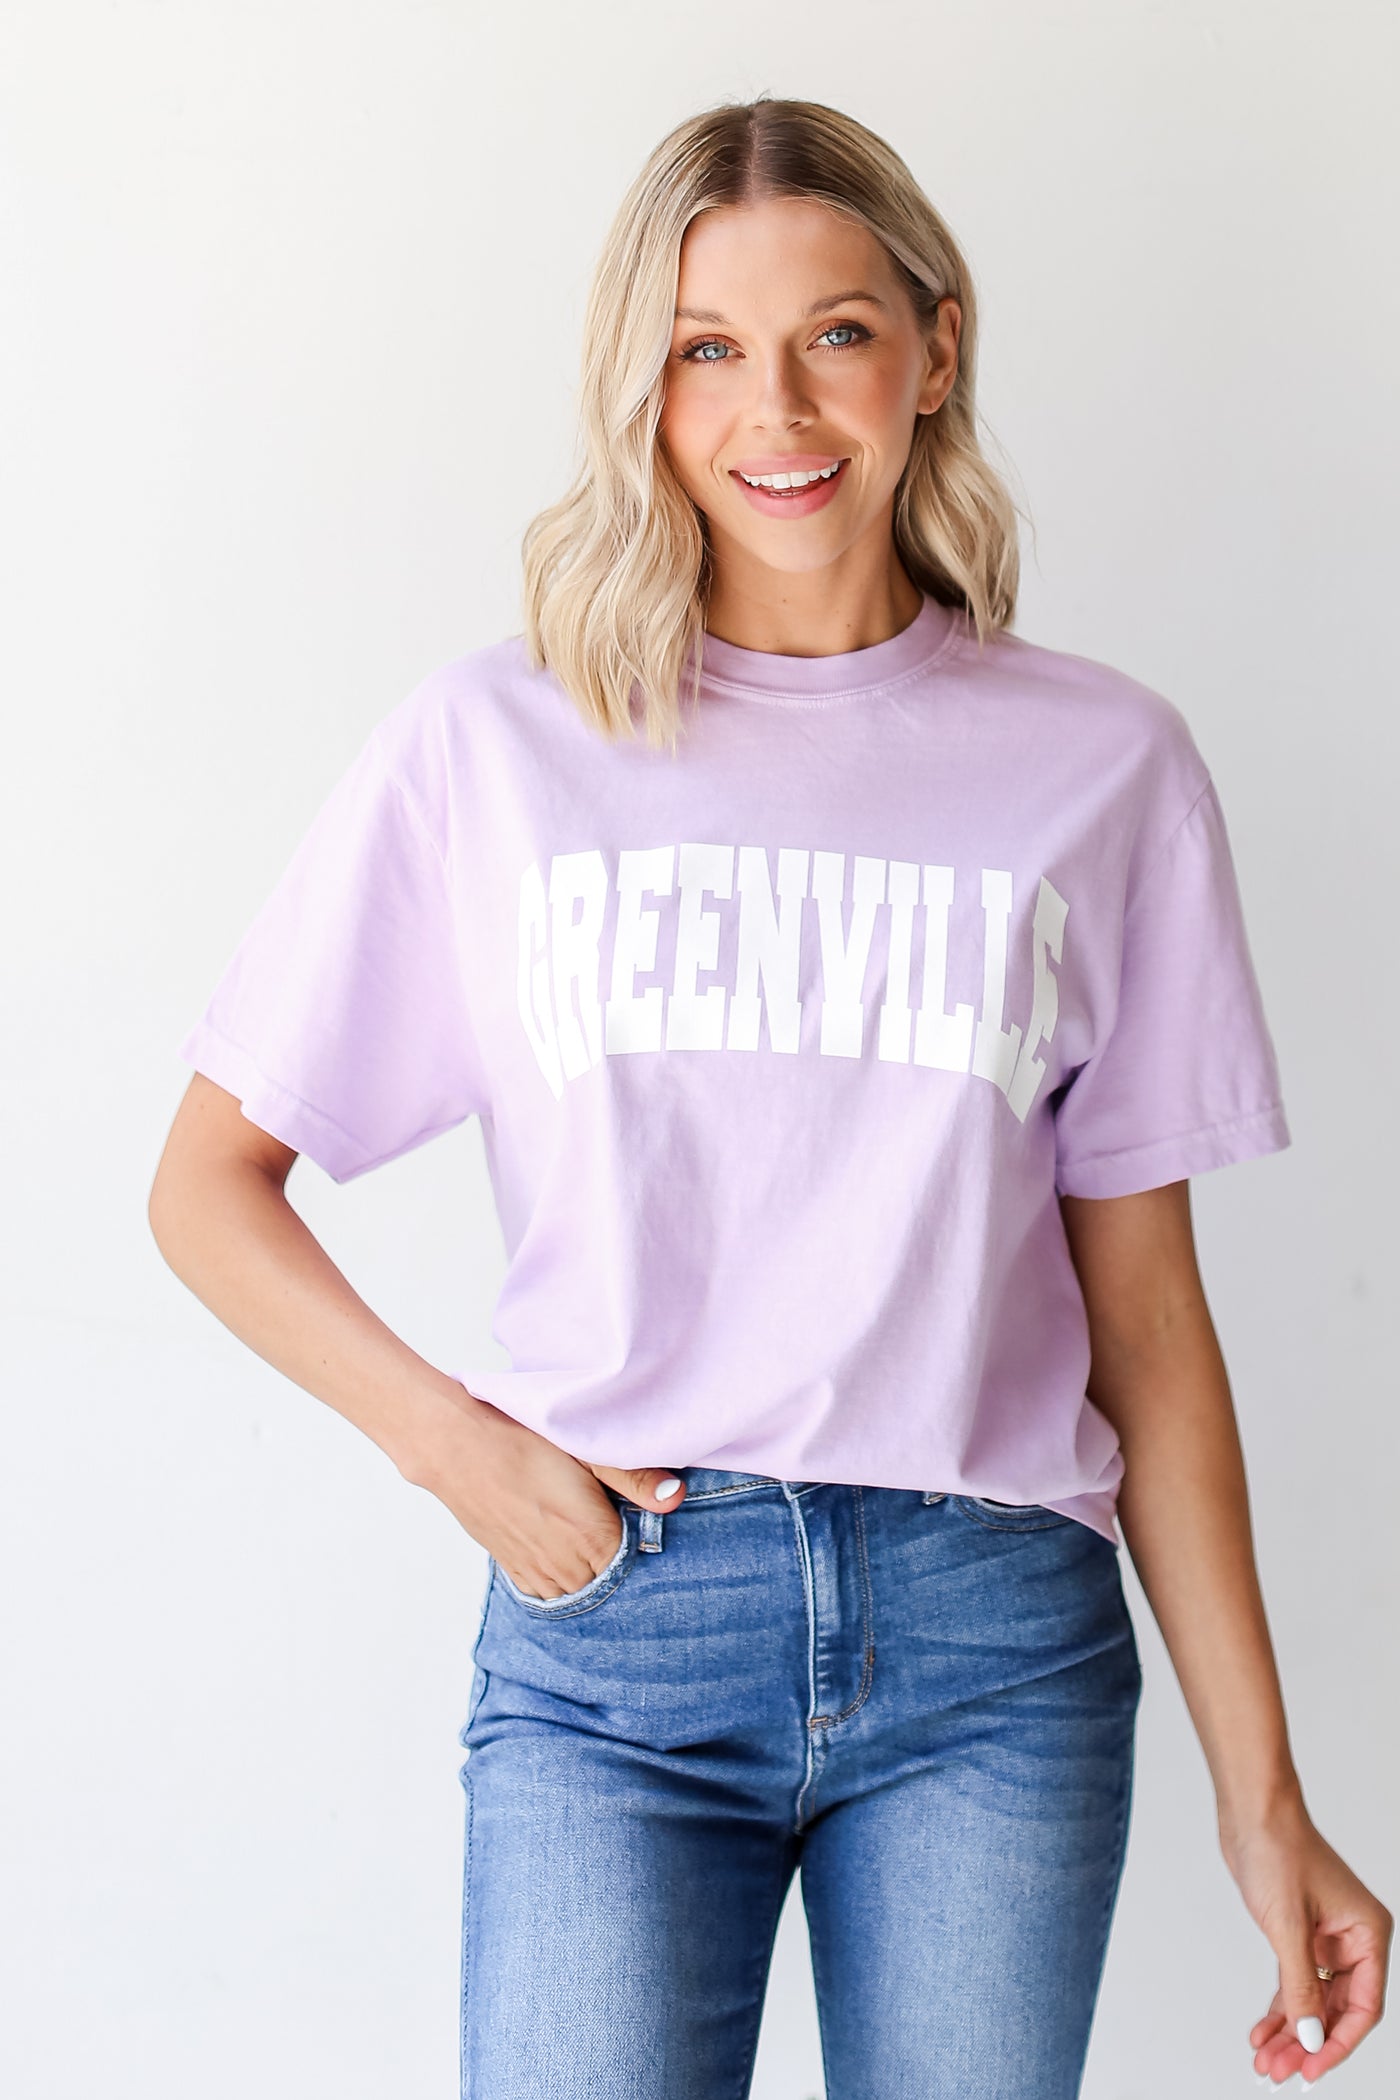 Lavender Greenville Tee on dress up model